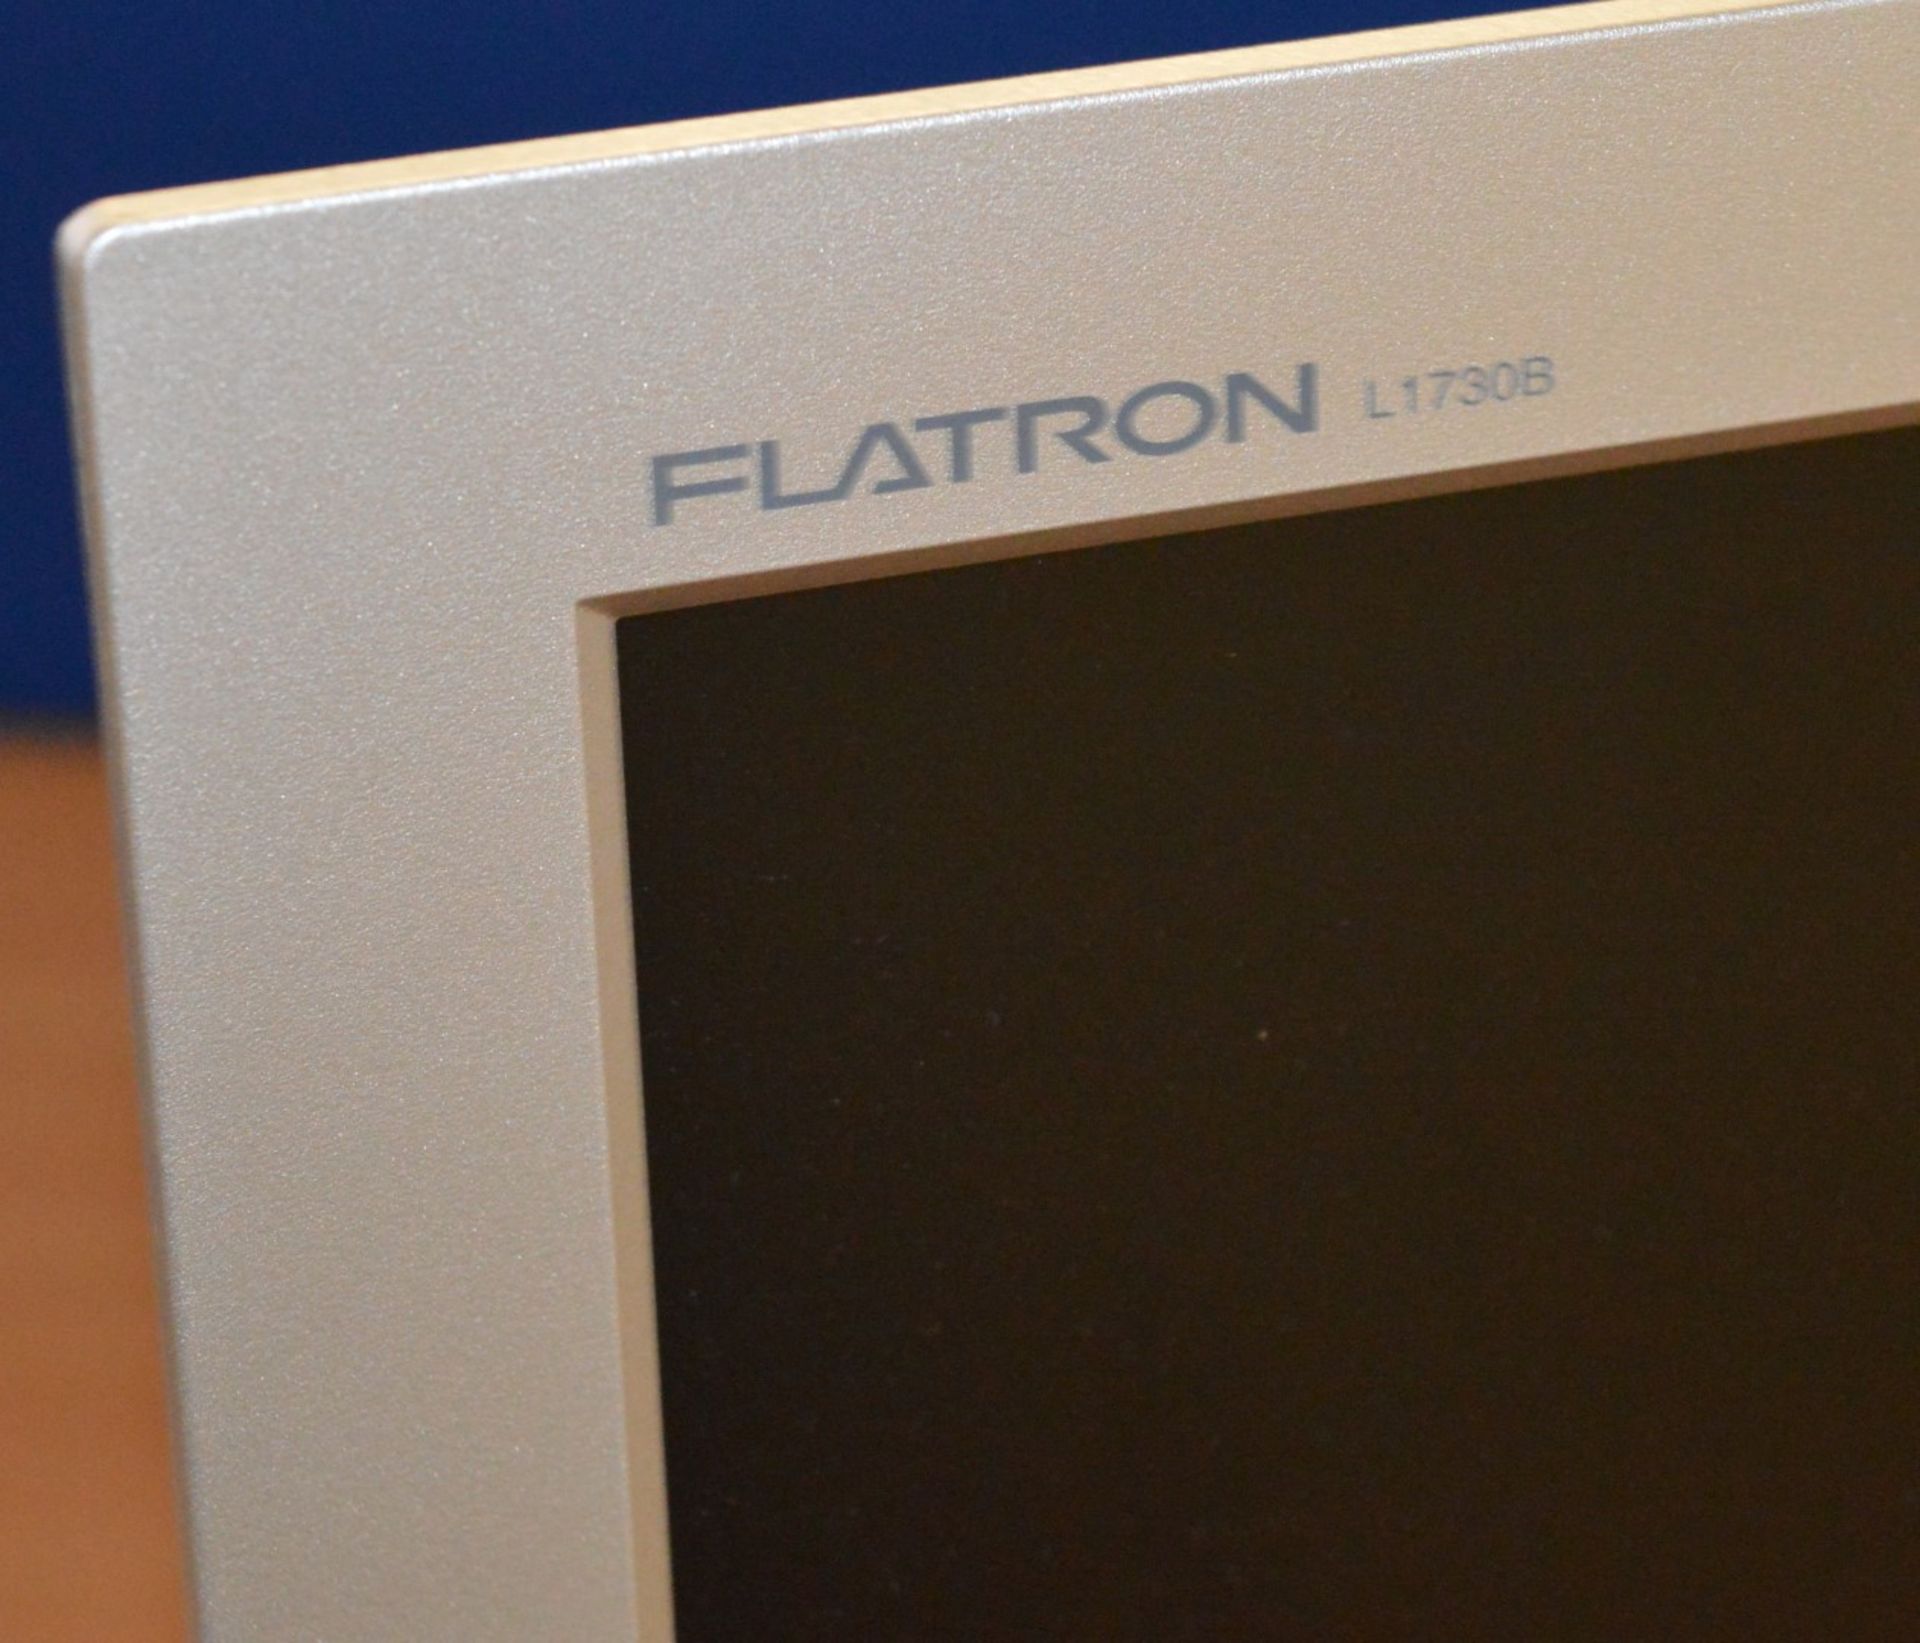 4 x LG Flatron L1730B Flatscreen TFT  Monitors - 17 Inch Screen Size - 1280 x 1024 Native Resolution - Image 3 of 5